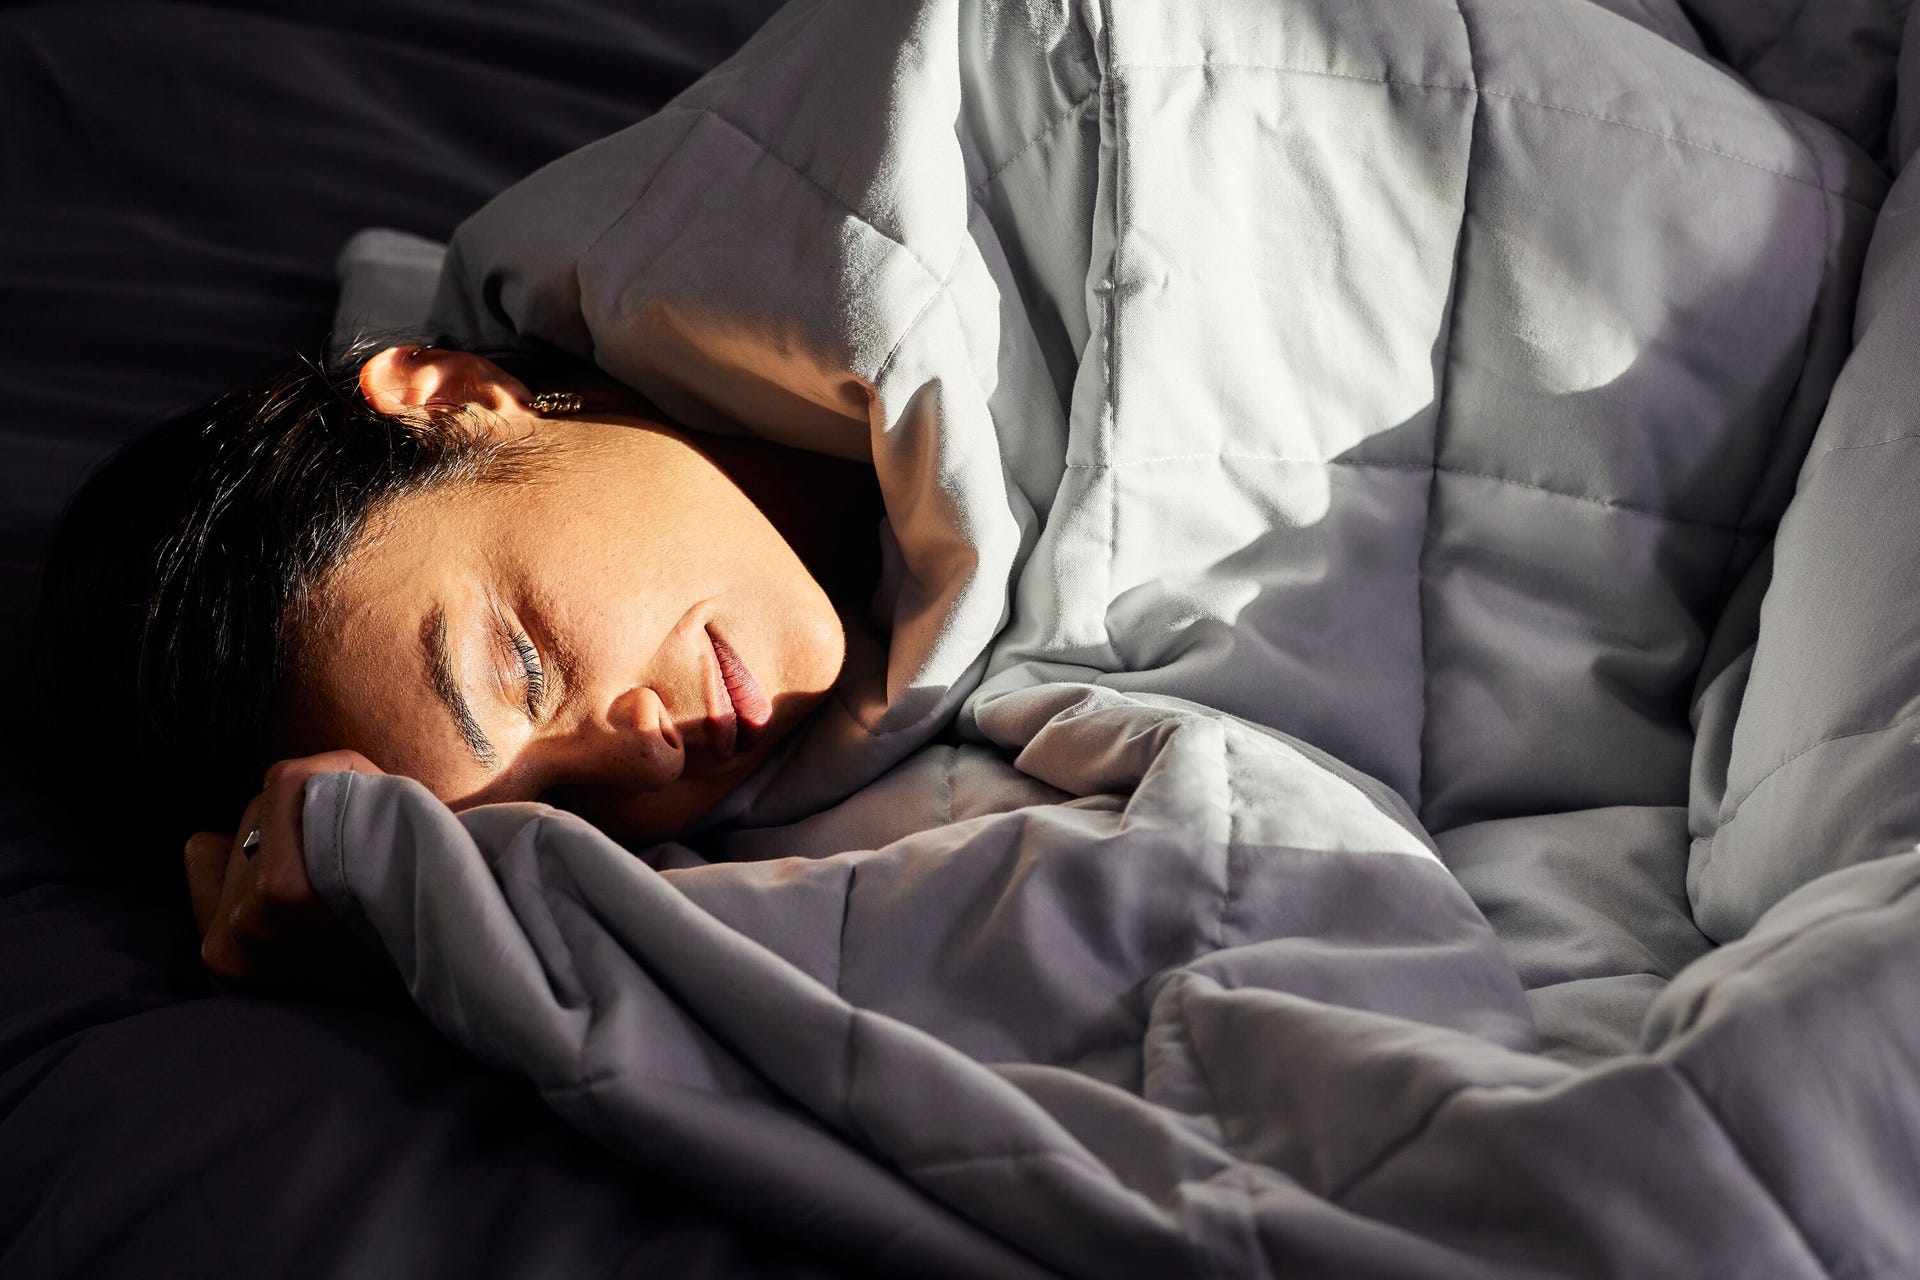 Emma Hug Weighted Blanket - Fall asleep & relax more easily